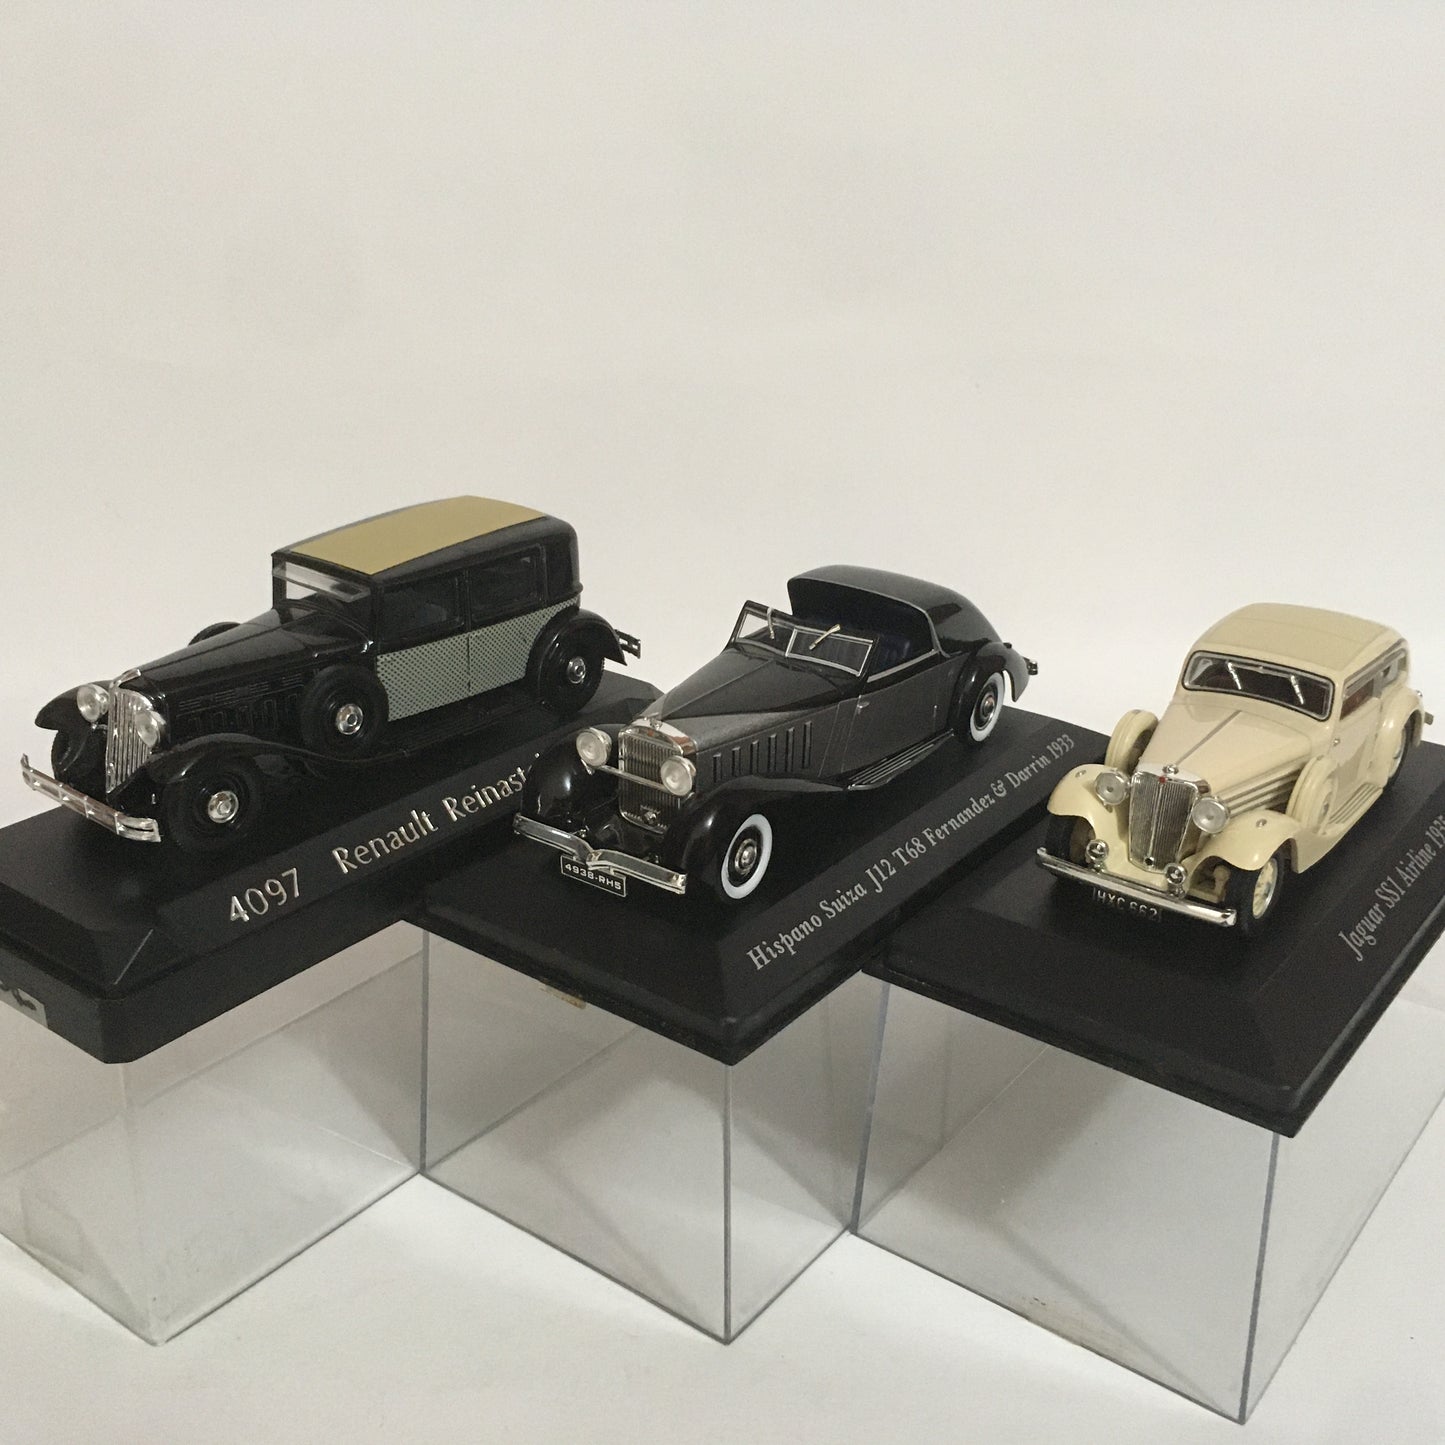 Altaya Solido, Modellini in Metallo Pressofuso Scala 1:43, Jaguar SS1, Hispano-Suiza J12, Renault Reinastella